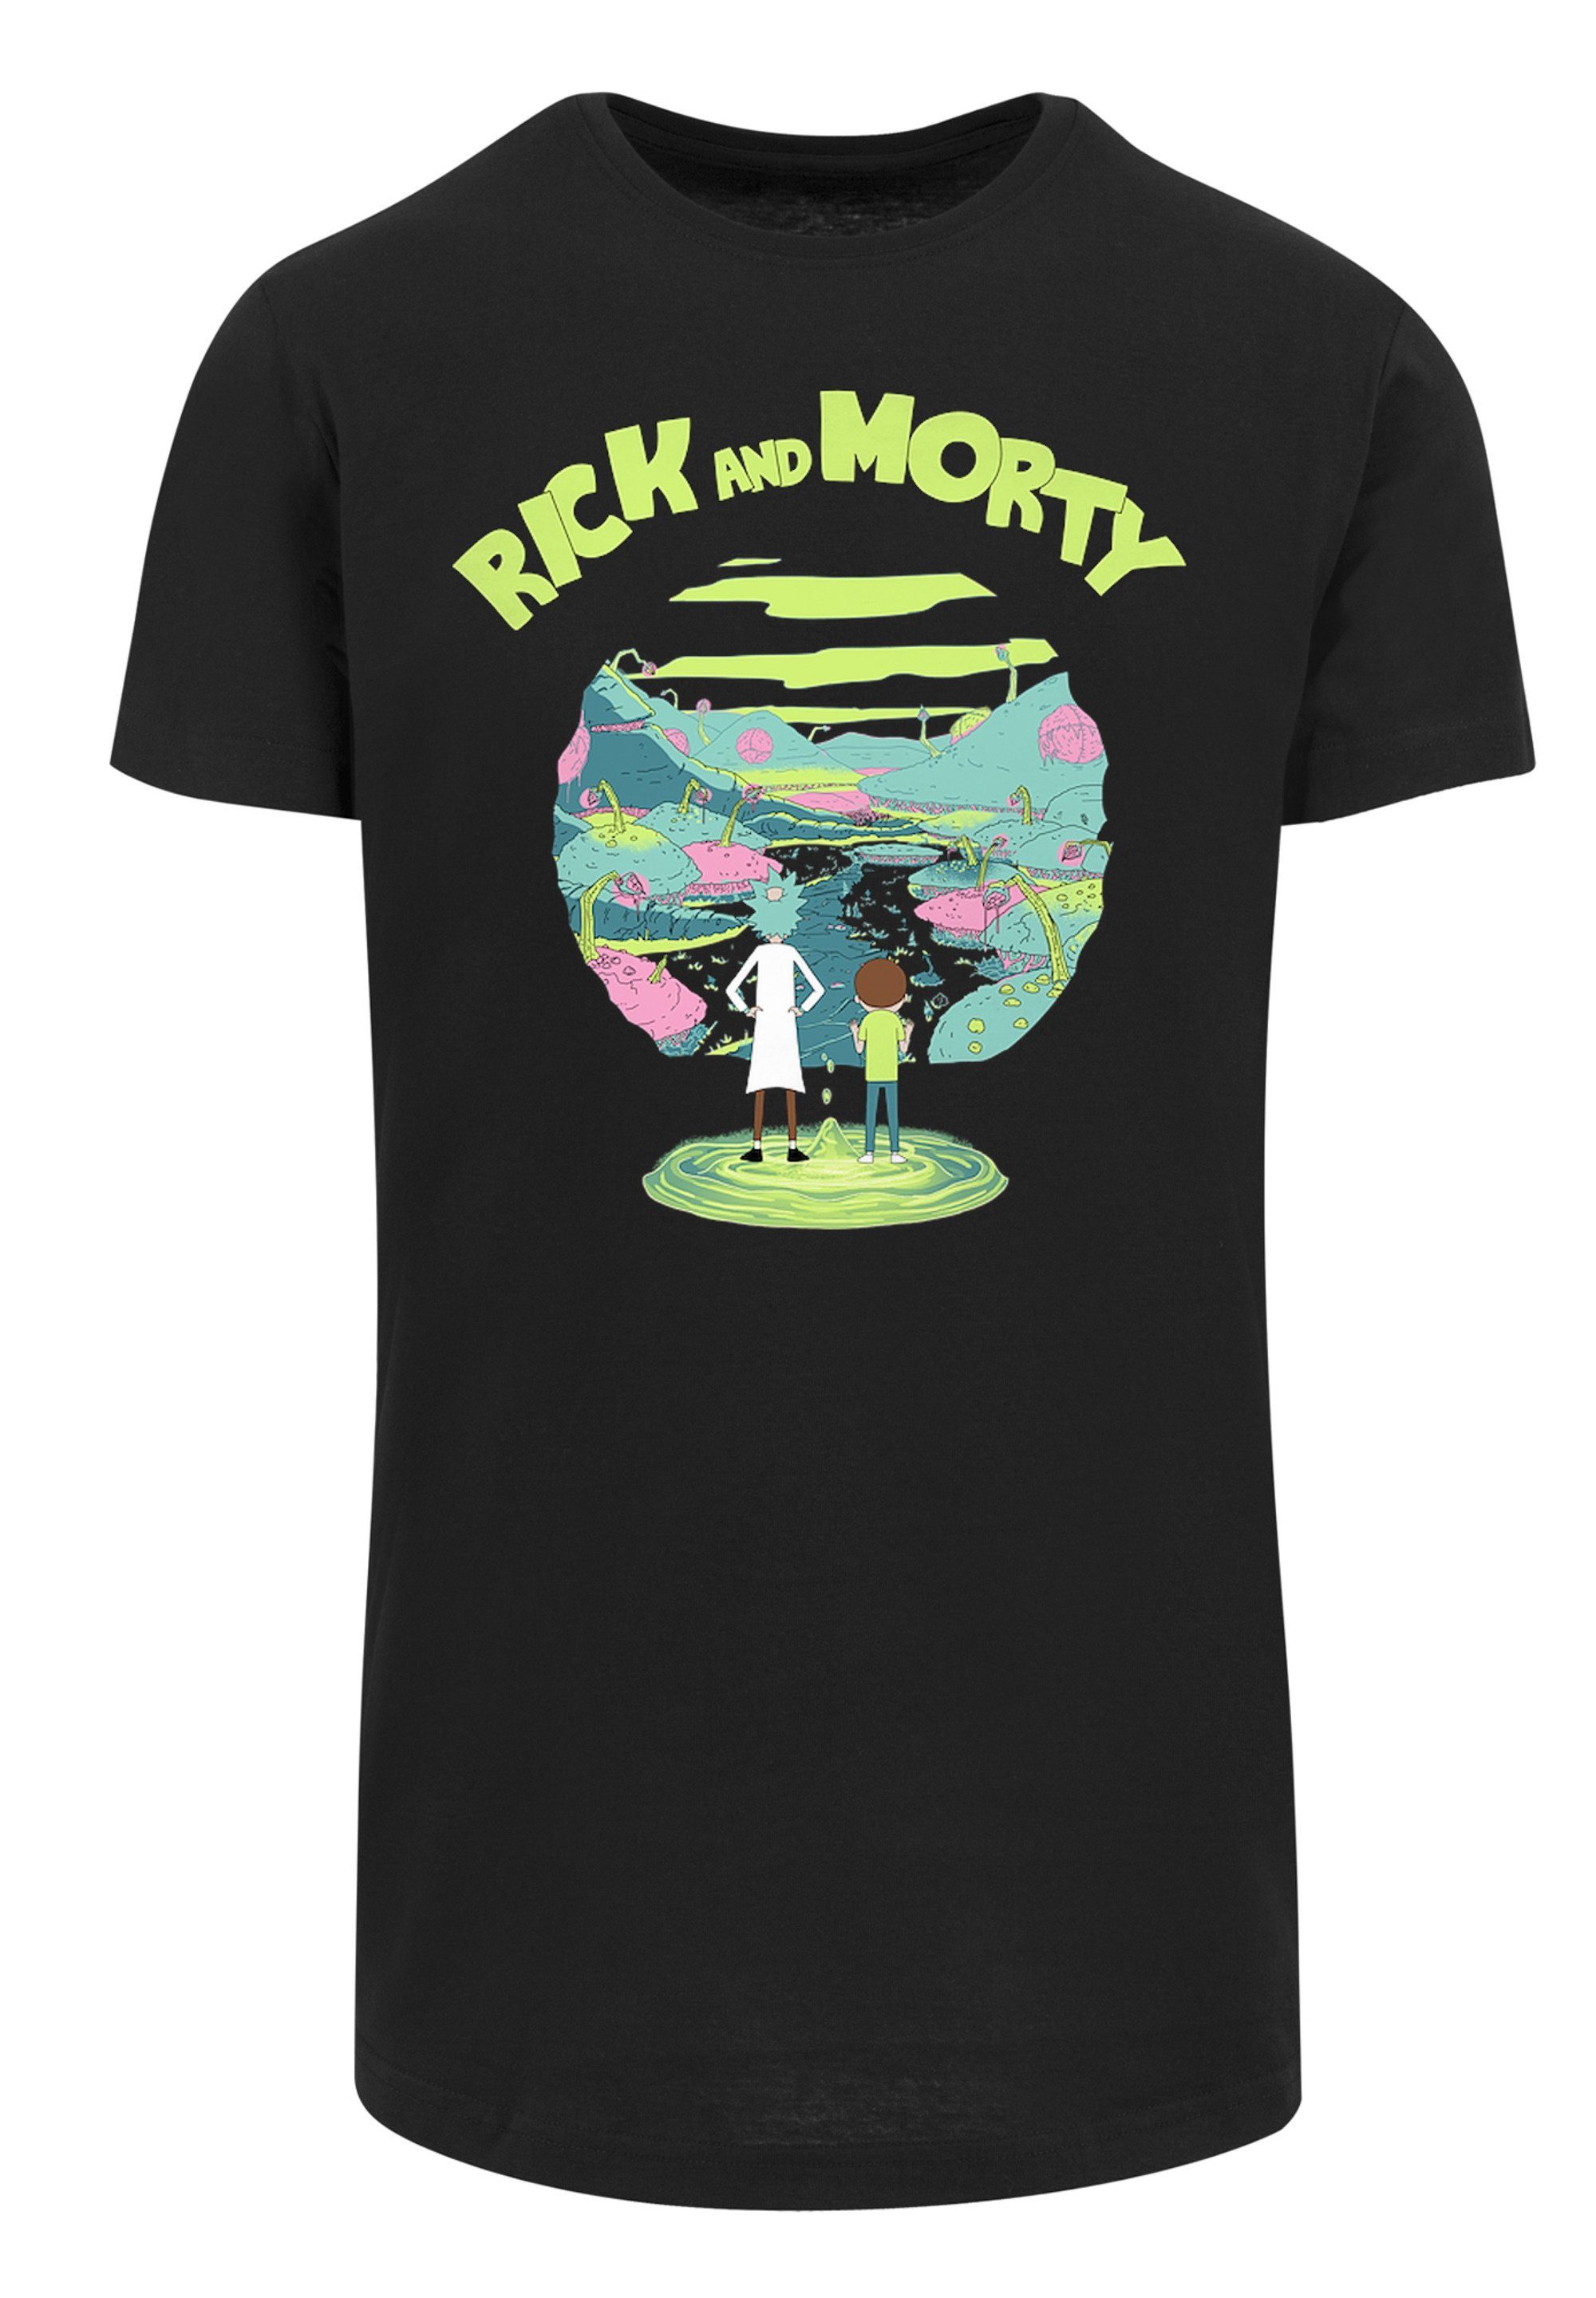 Morty schwarz Portal T-Shirt and Print F4NT4STIC Rick